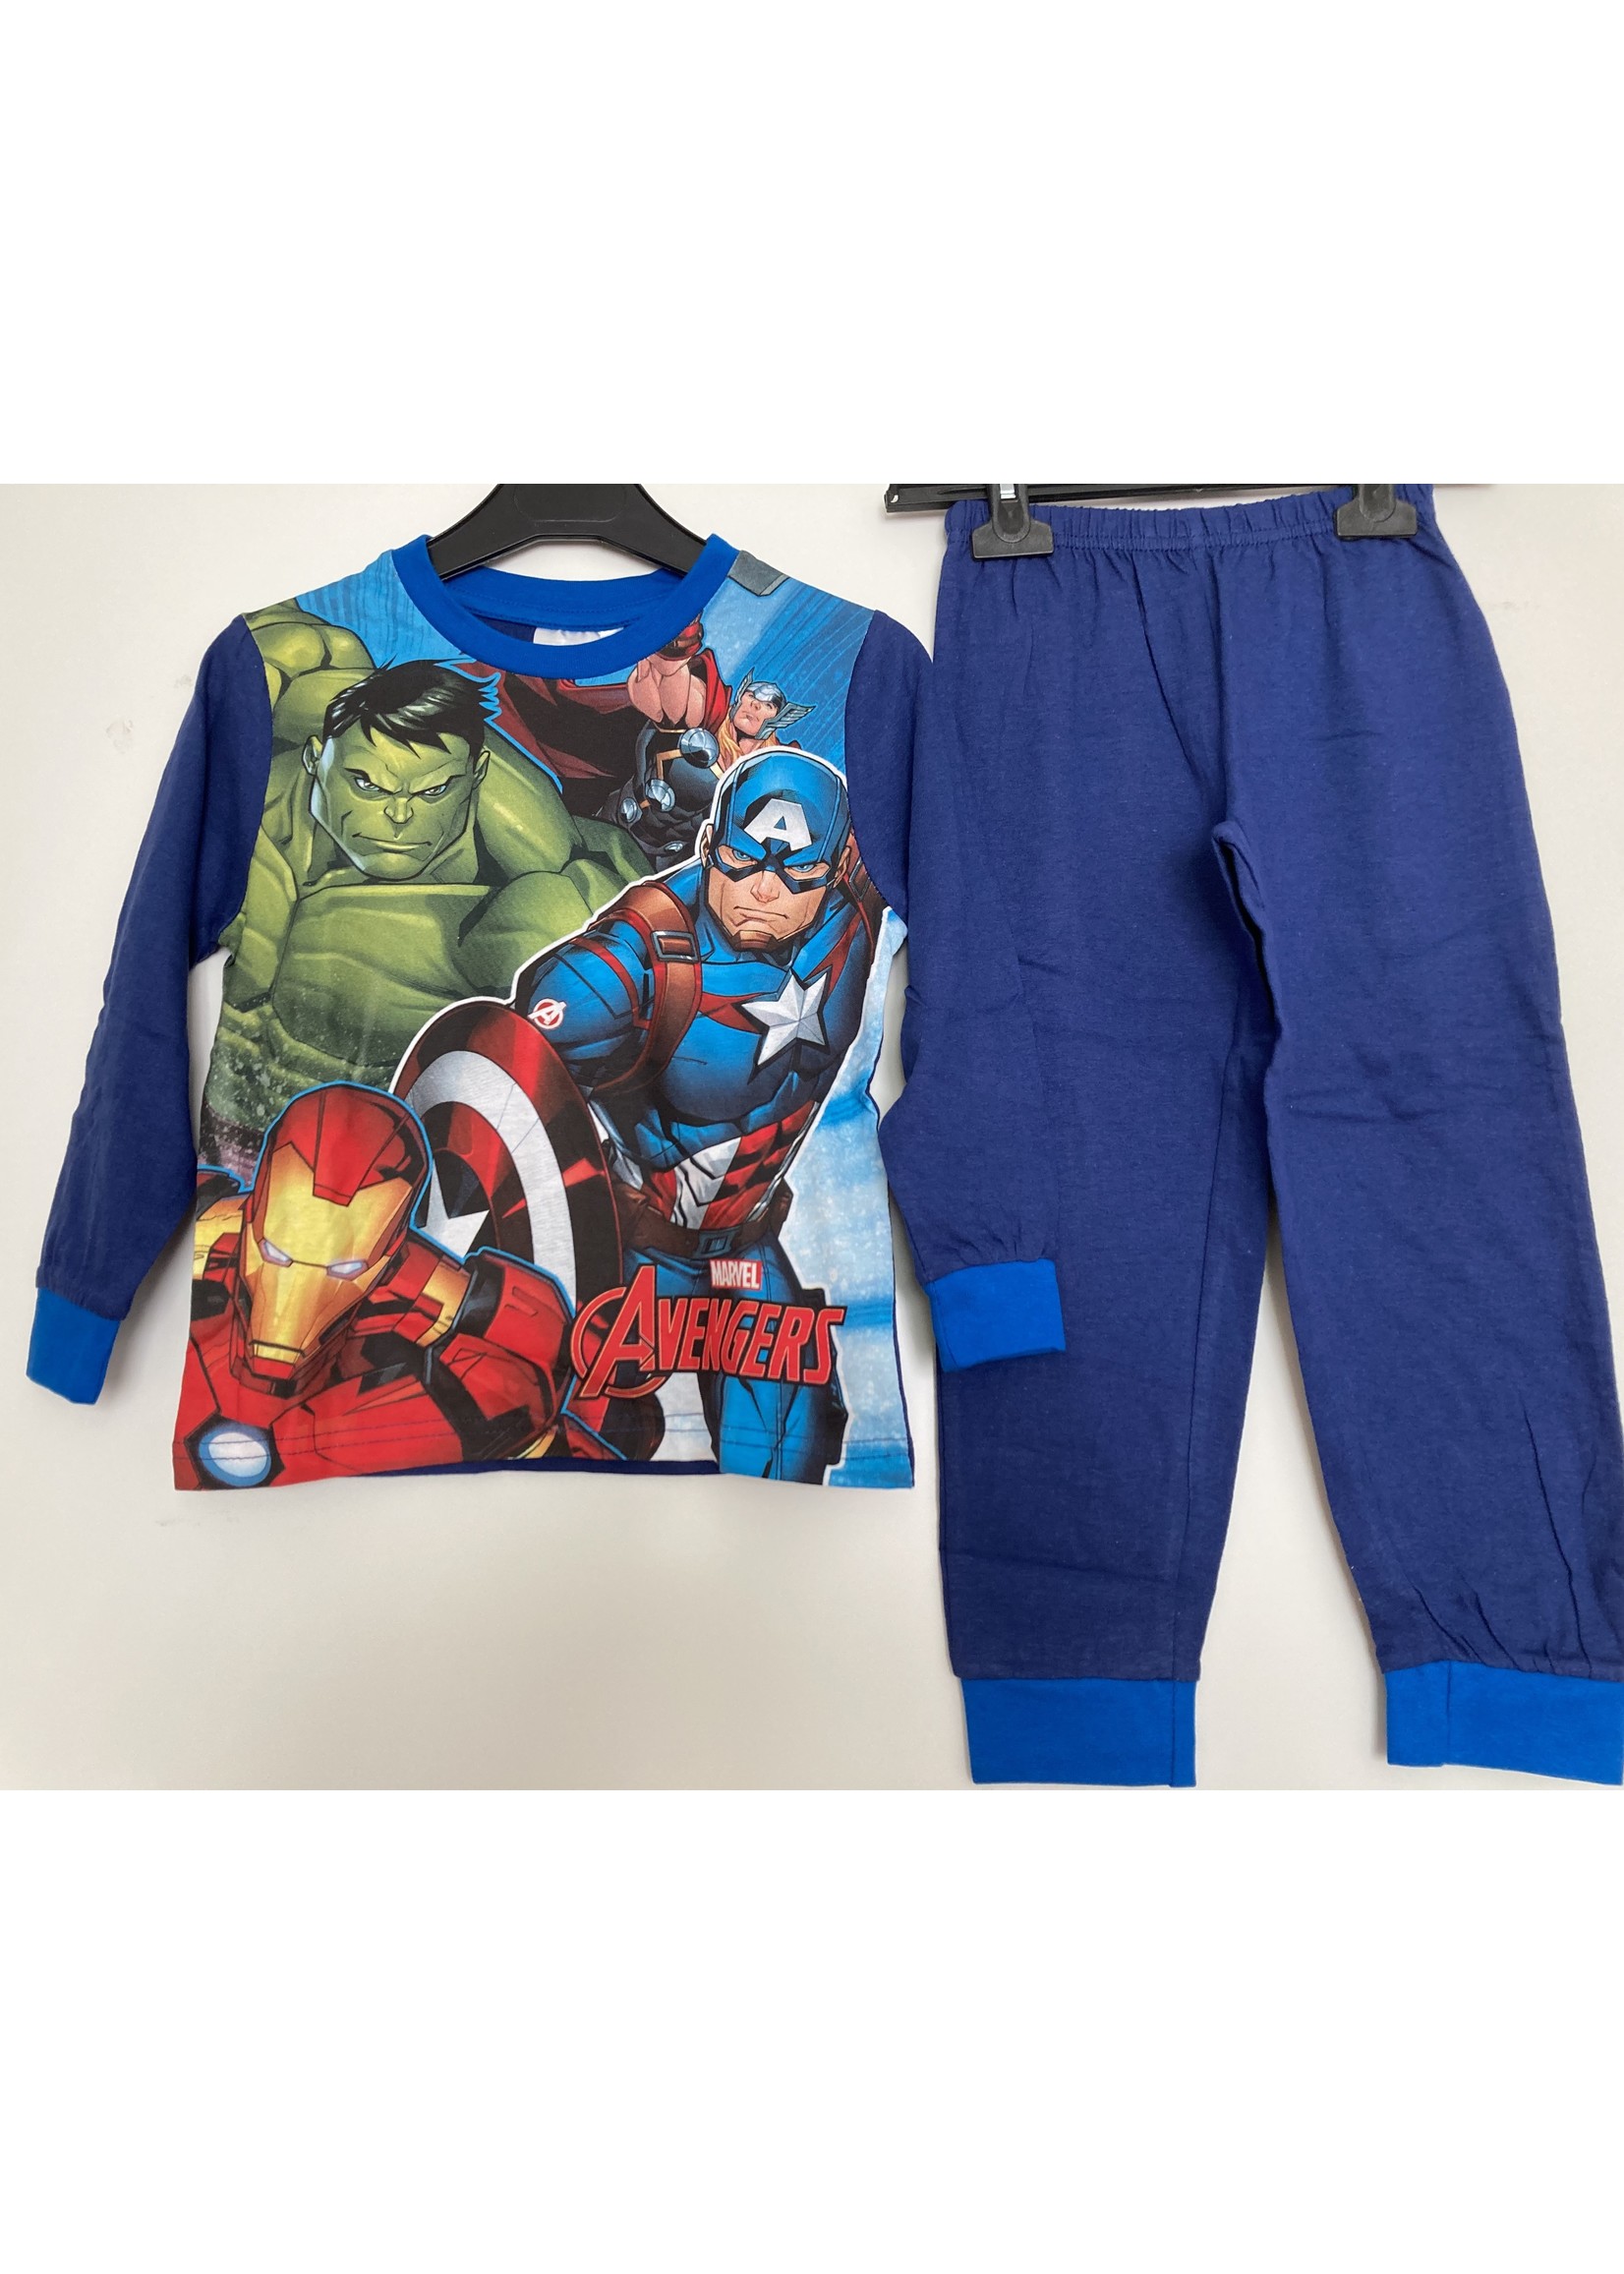 Marvel Avengers Pajamas from Marvel blue